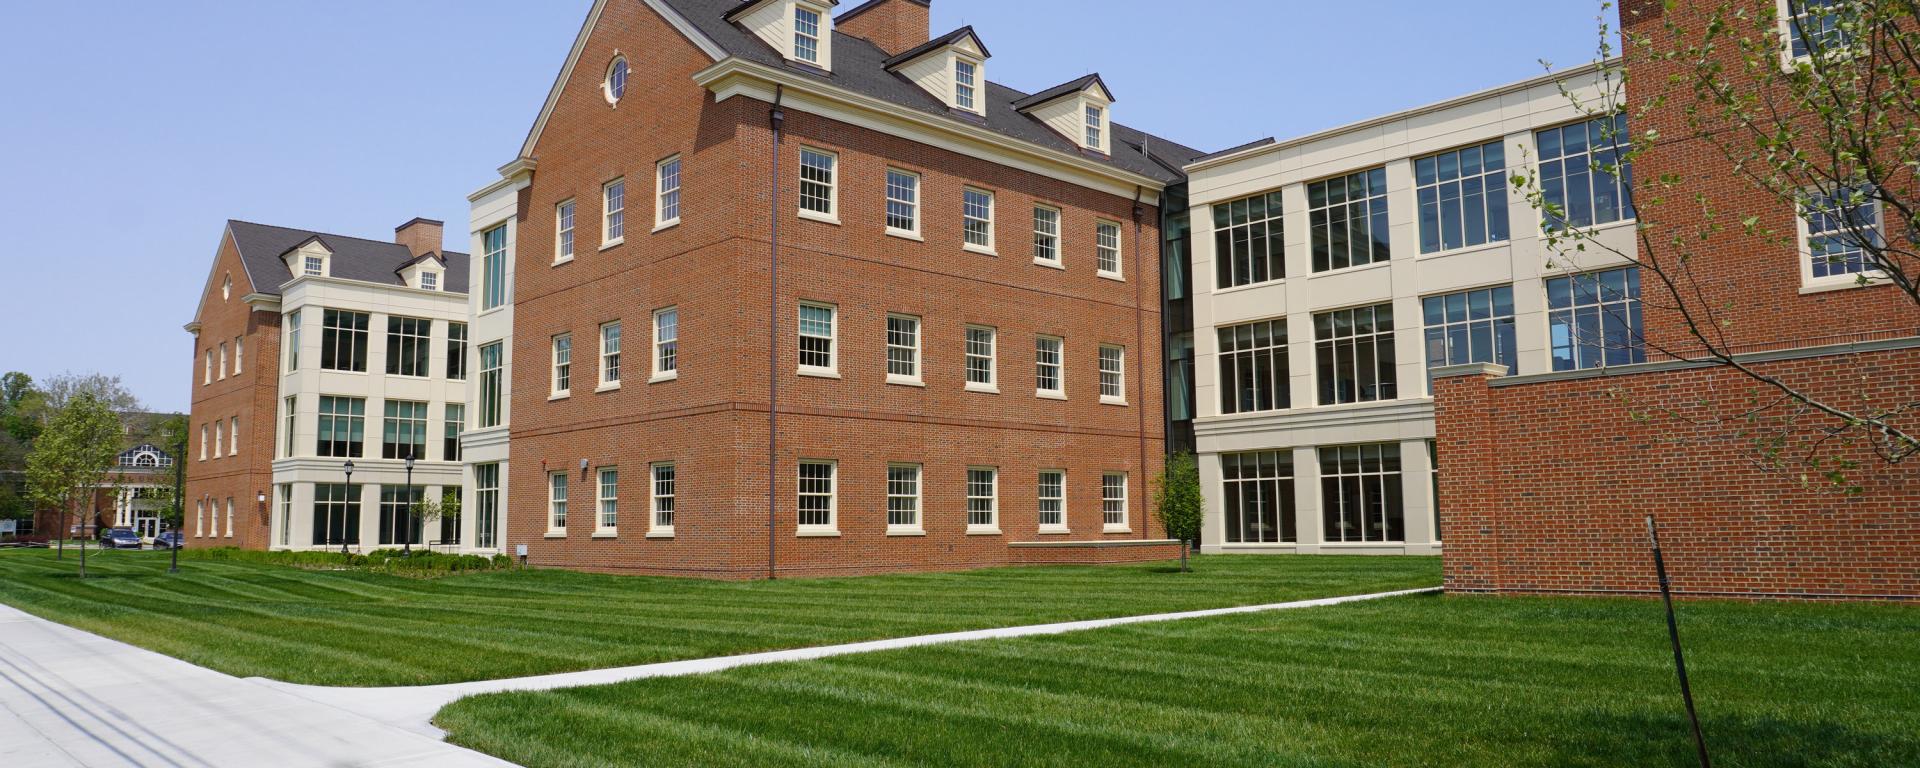 brick academic building